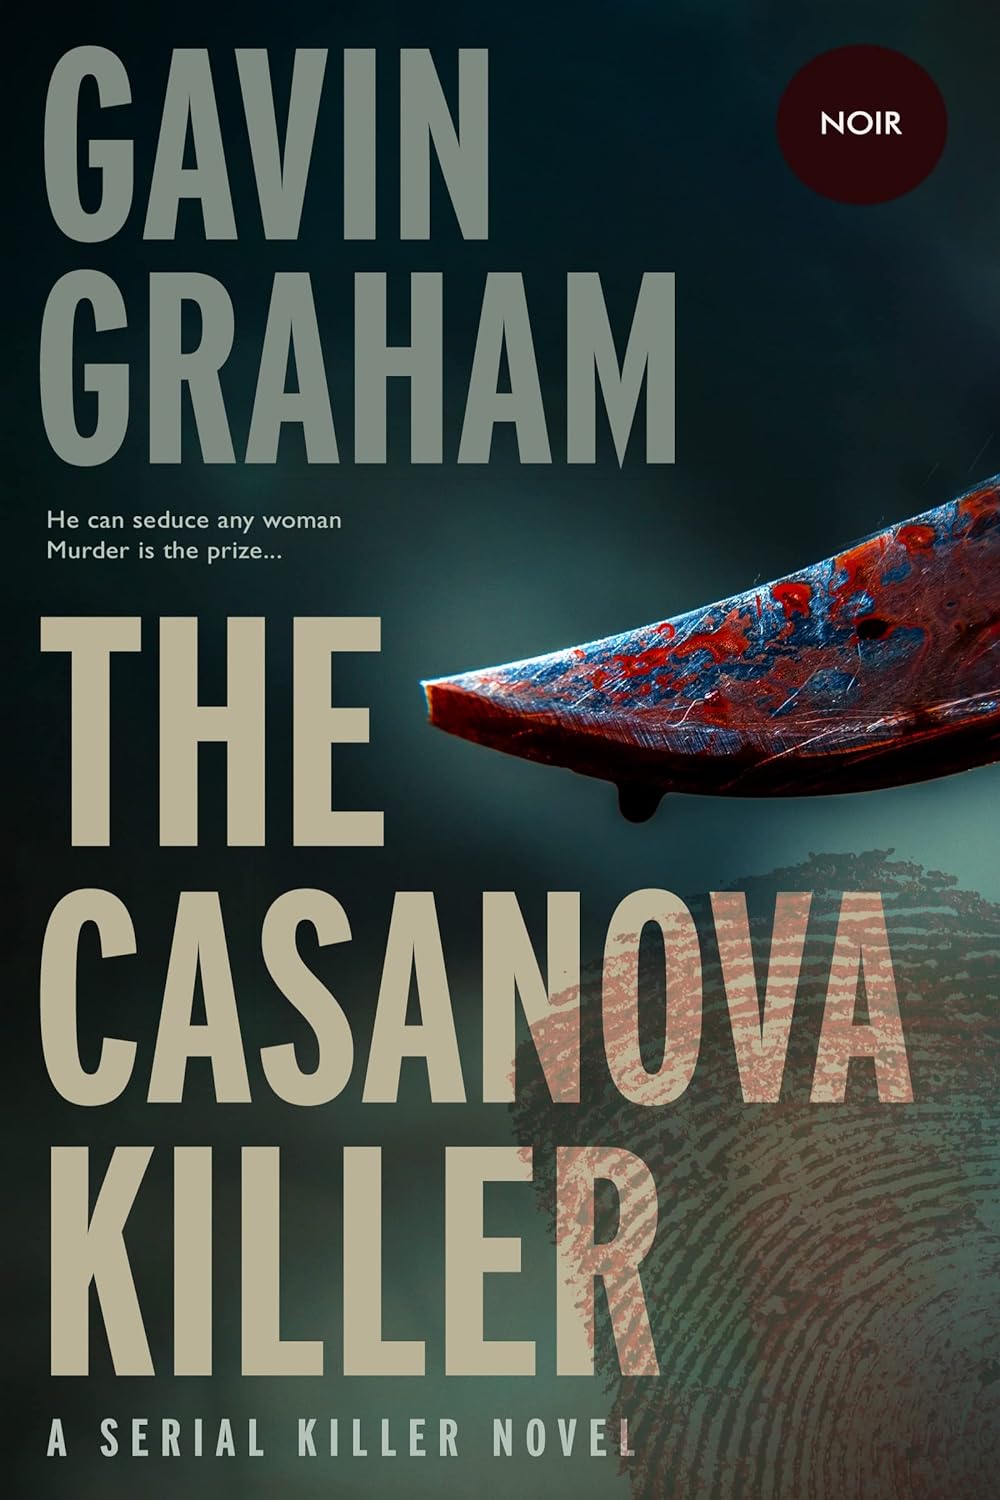 The Casanova Killer